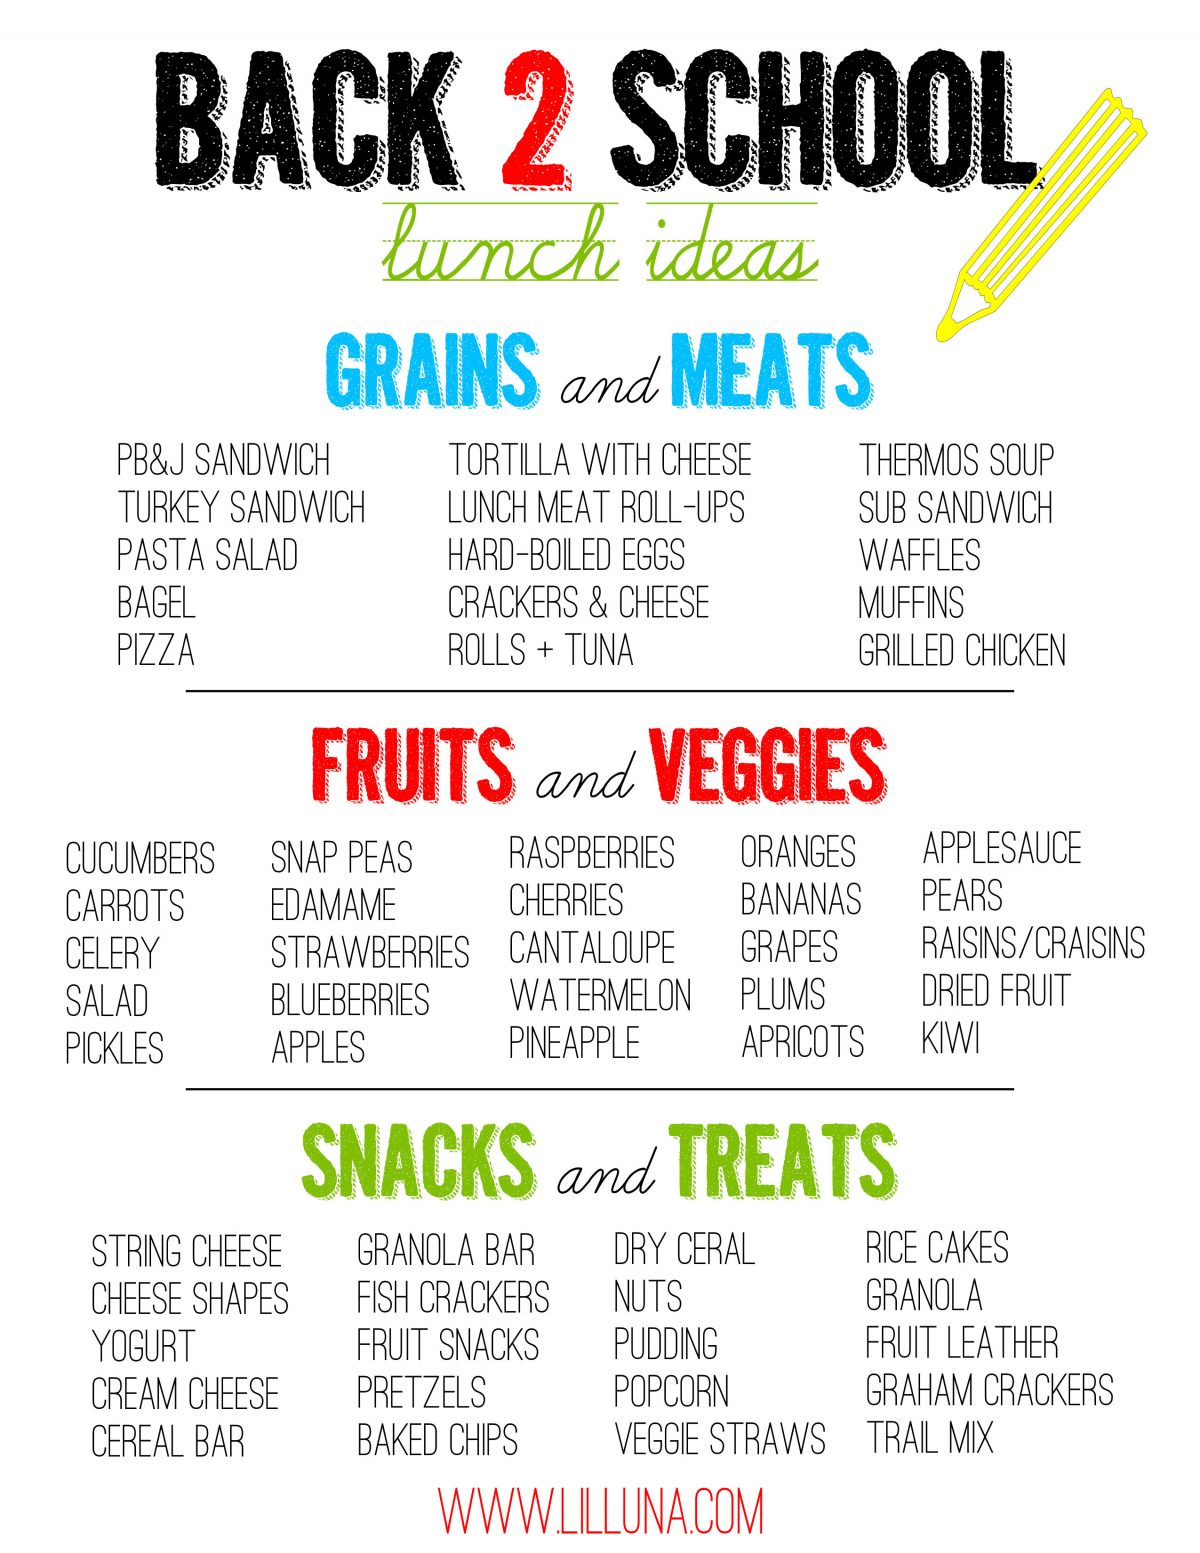 Back-to-School lunch ideas